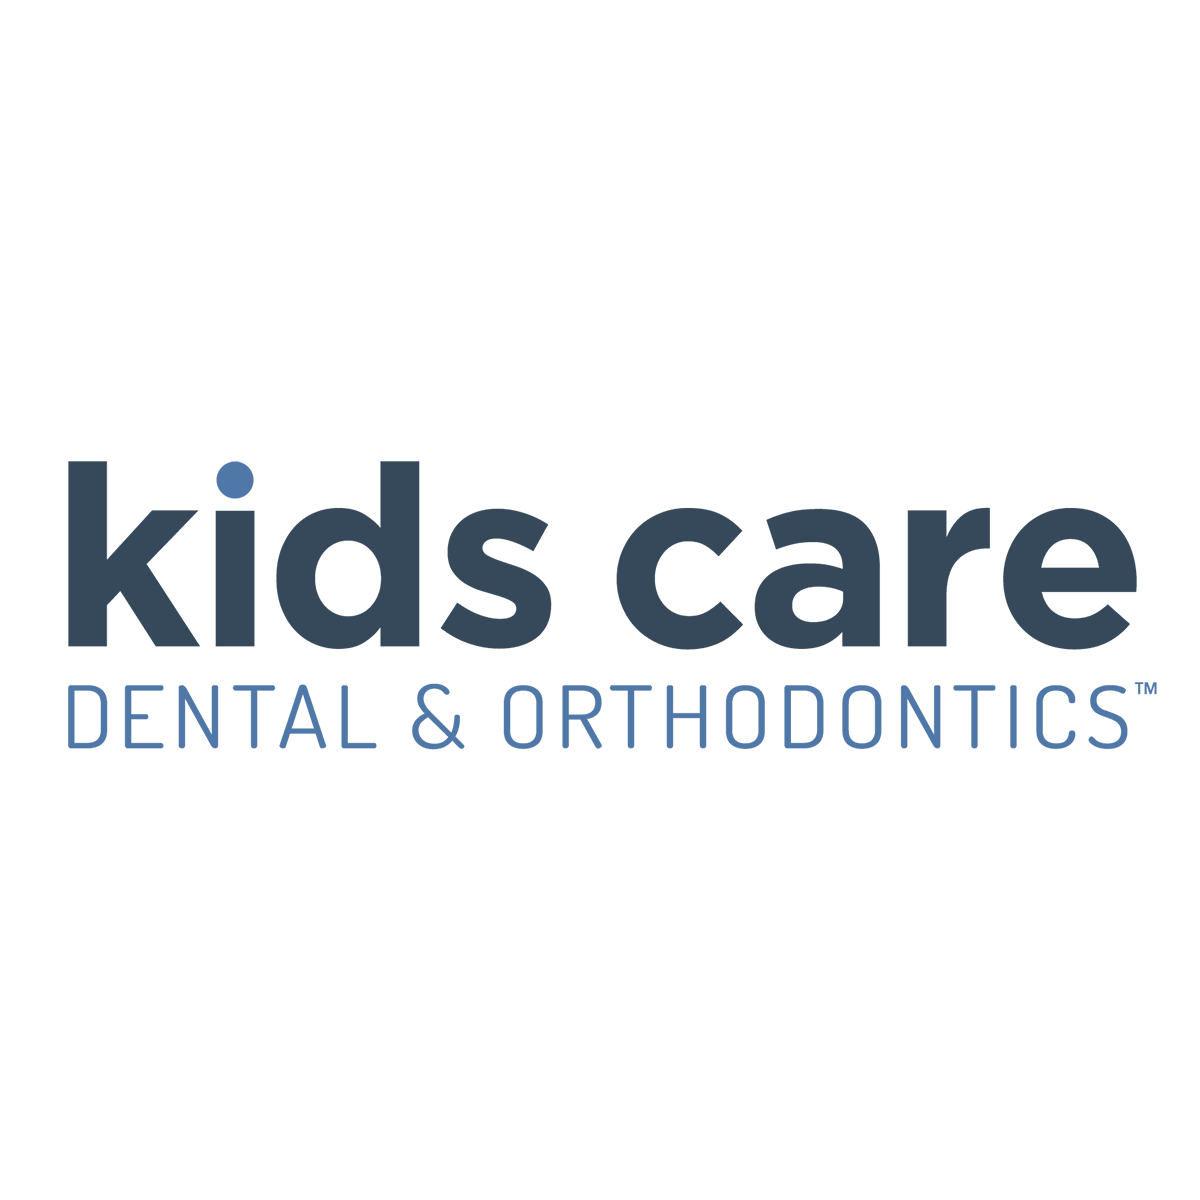 Kids Care Dental & Ortho Logo